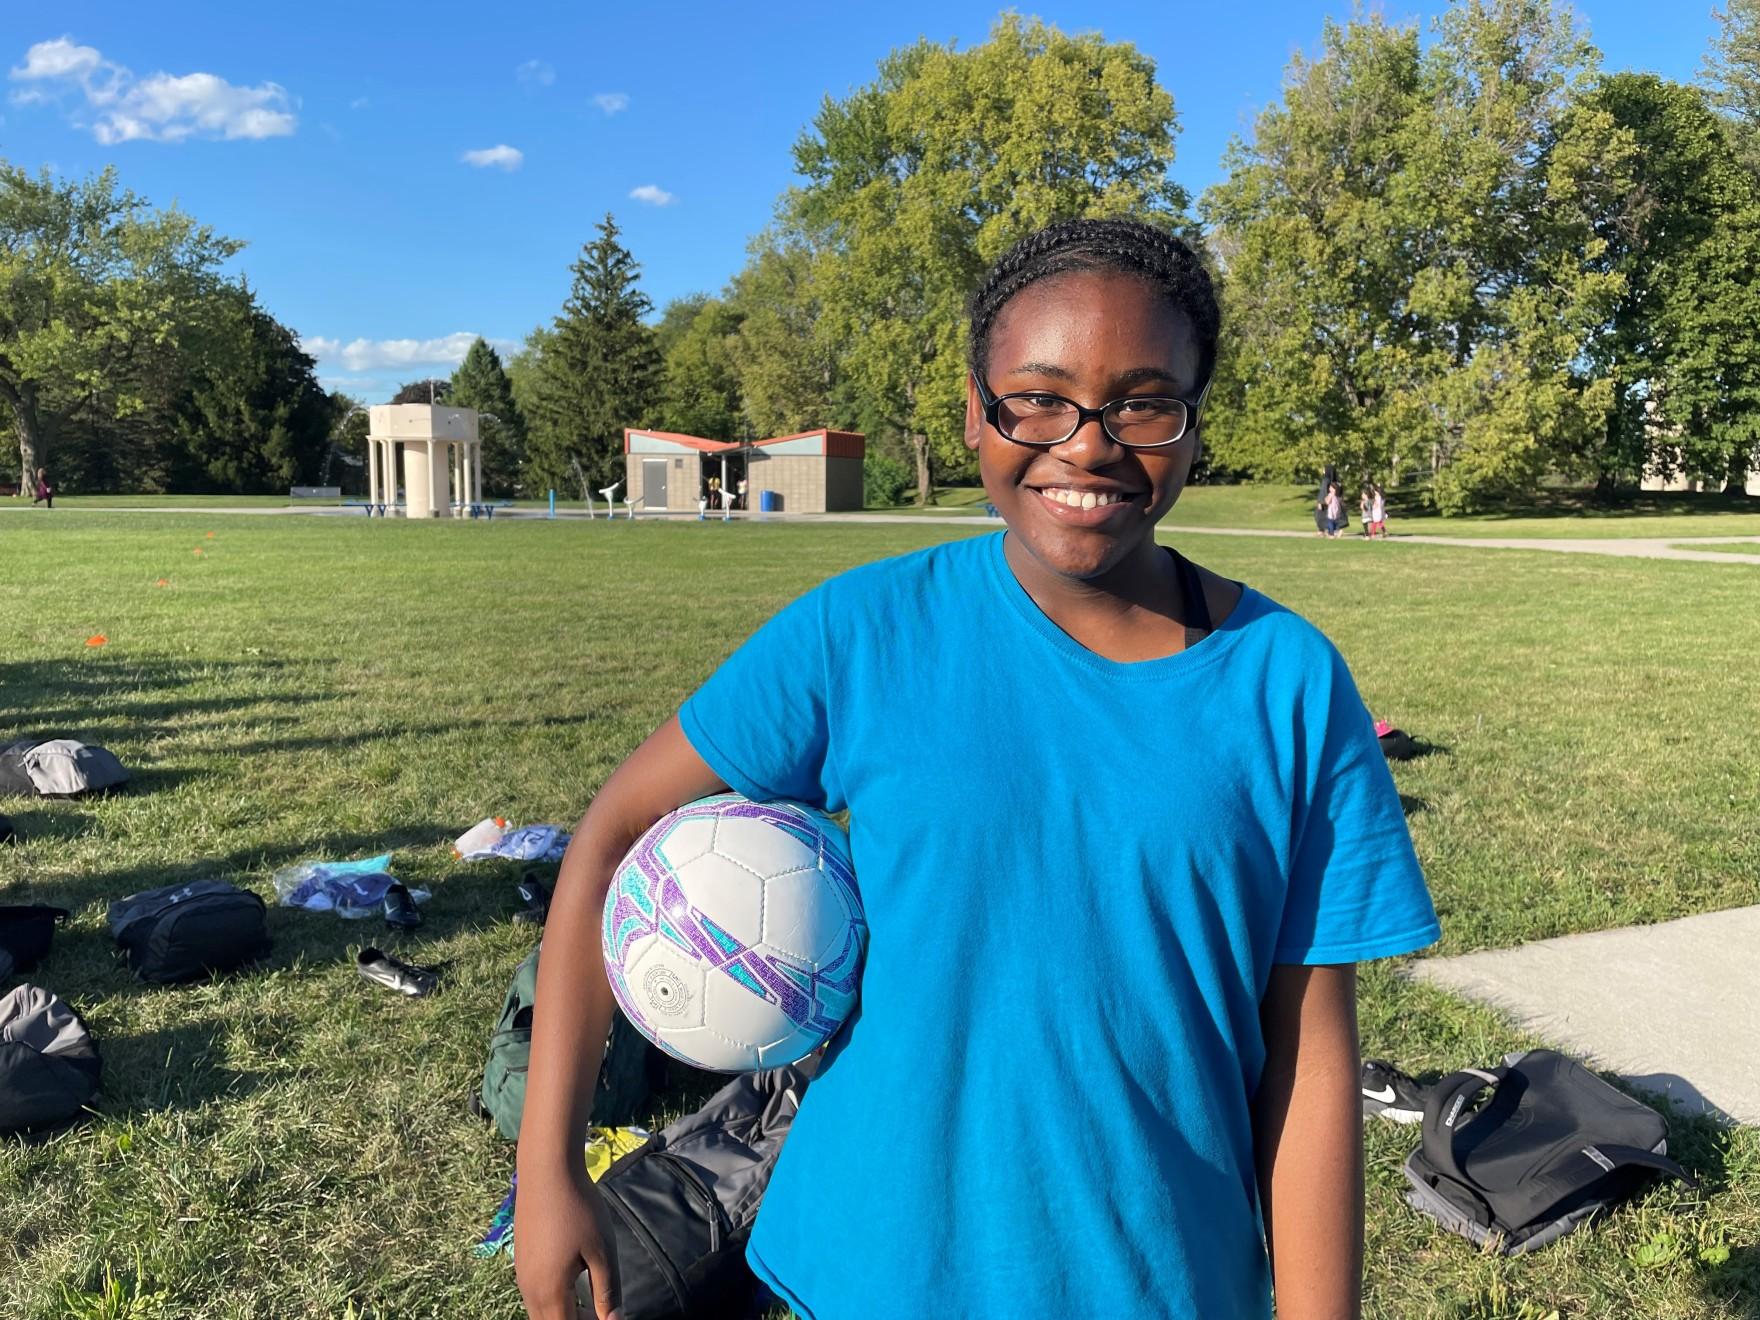 Nadege Lenge, 11, poses with her soccer ball